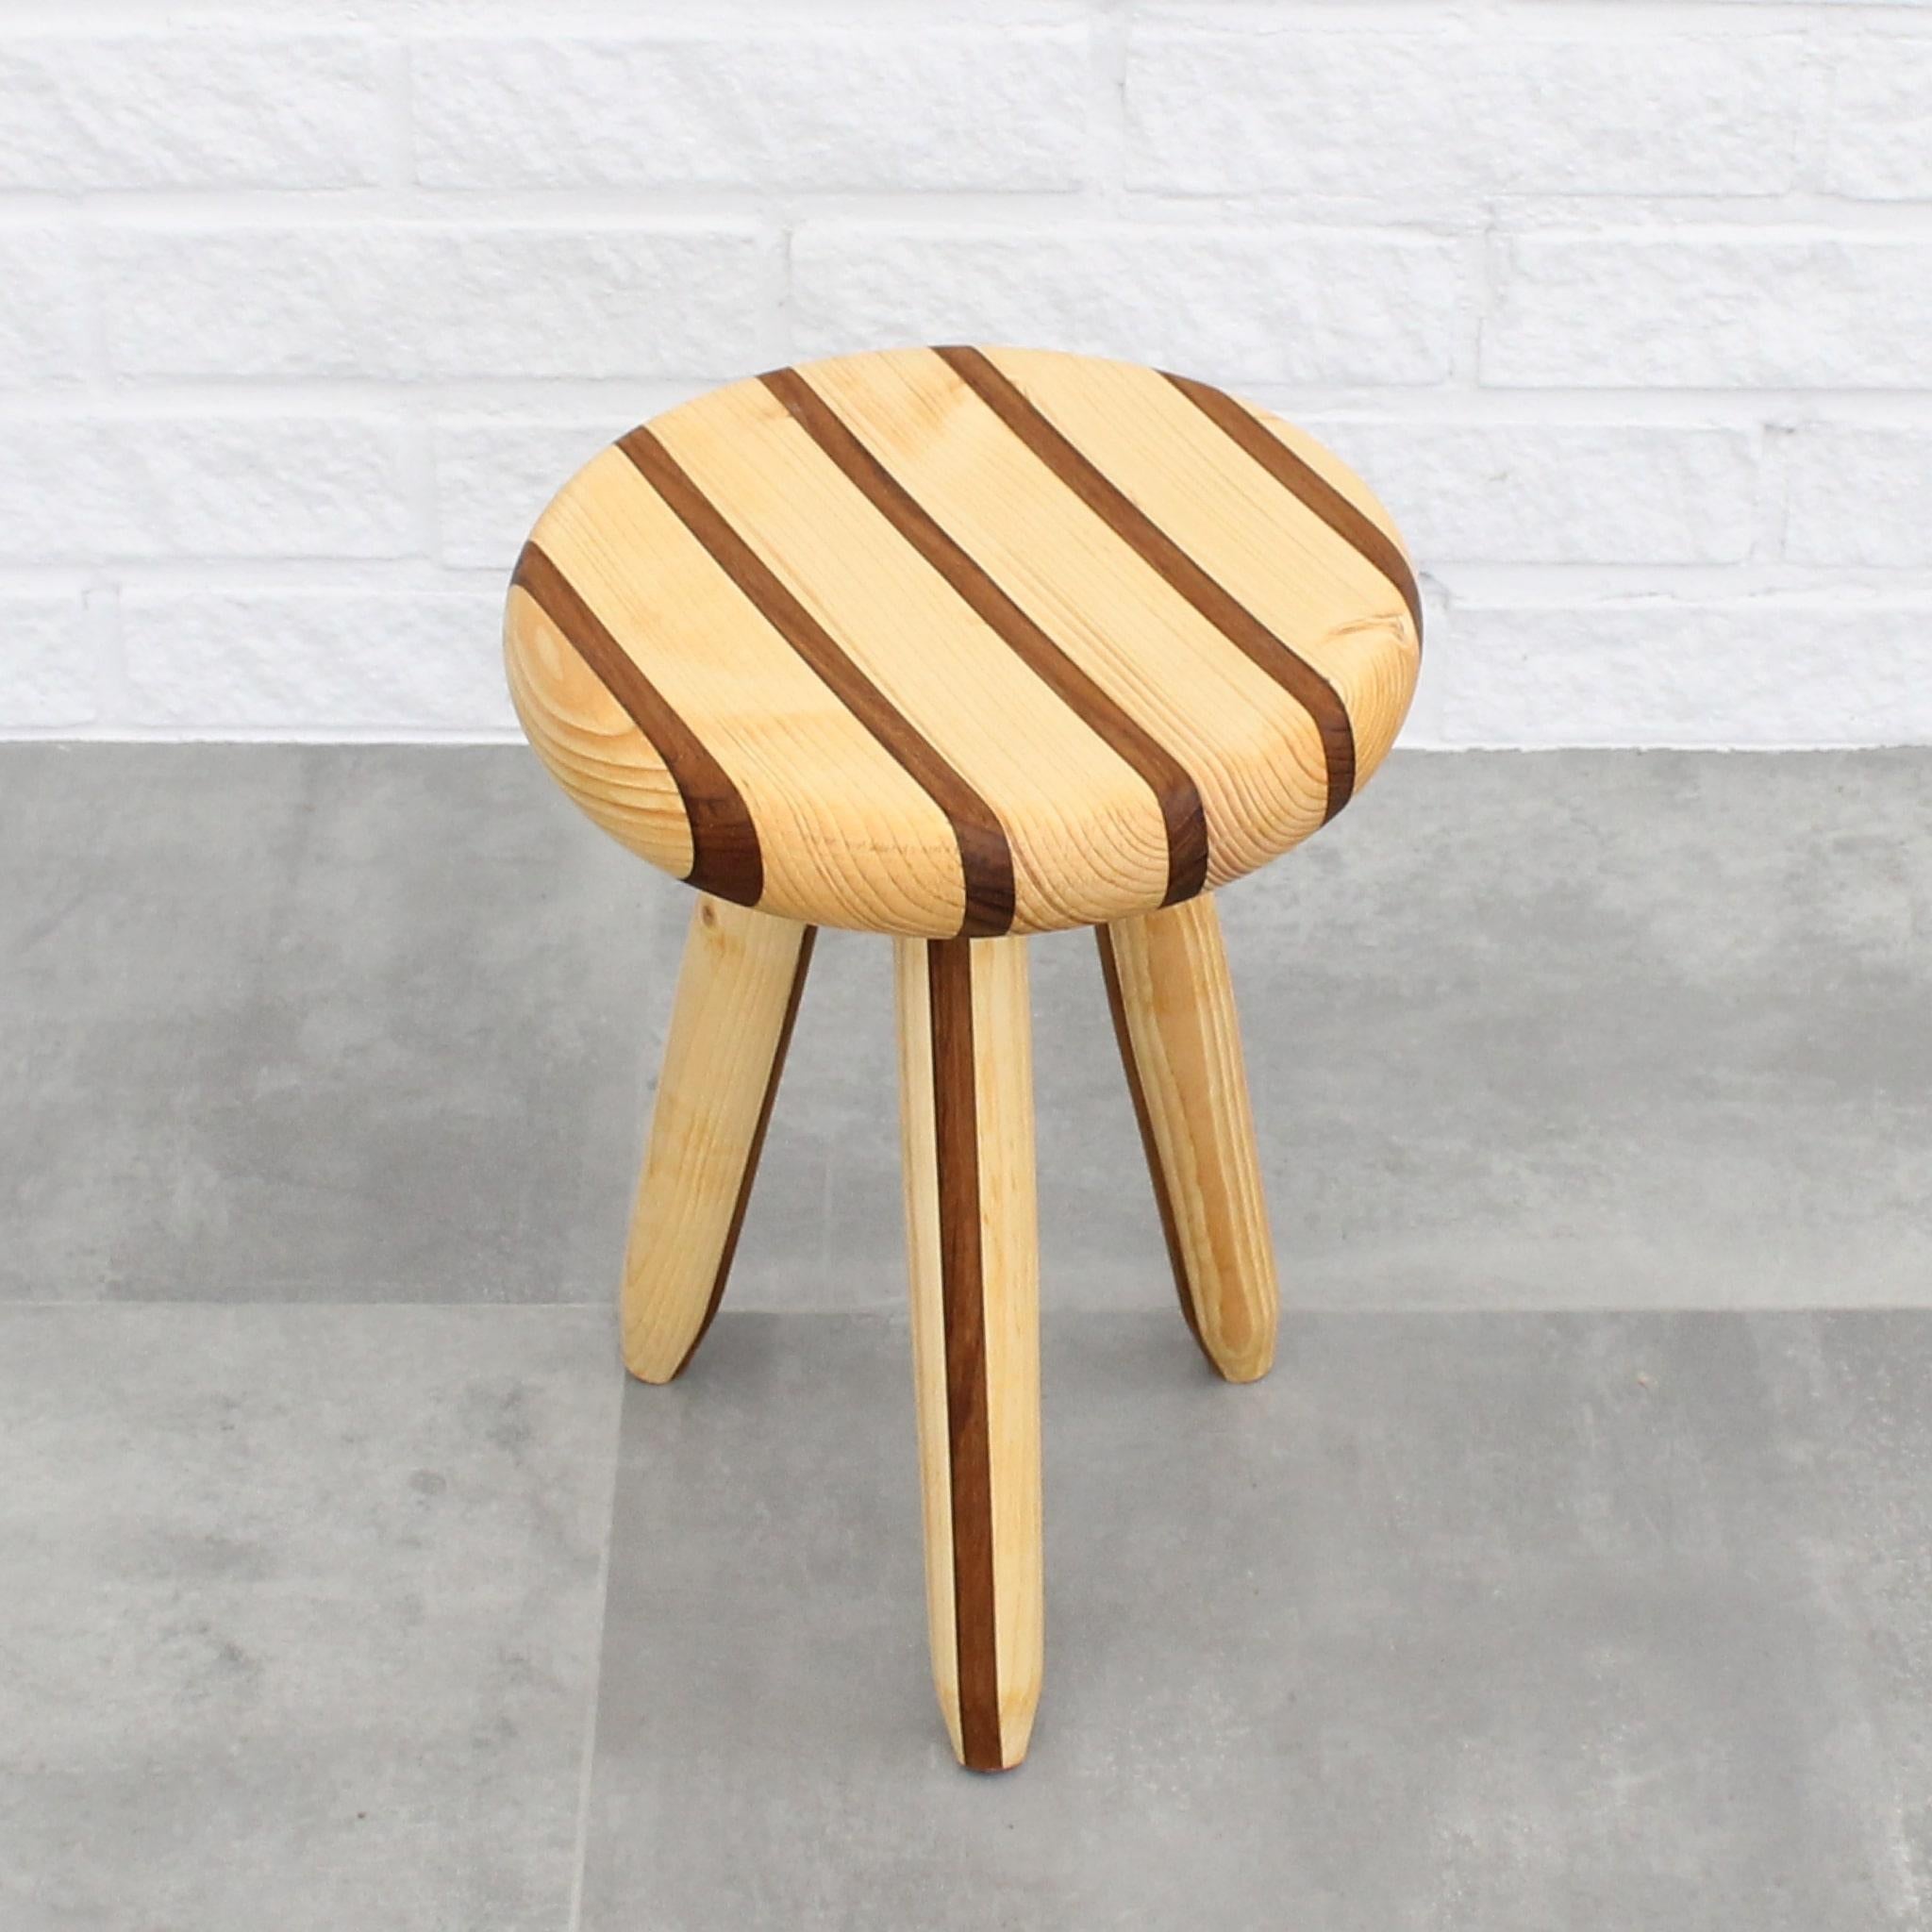 Scandinavian Modern Swedish milking stool in pine and teak by Andreas Zätterqvist